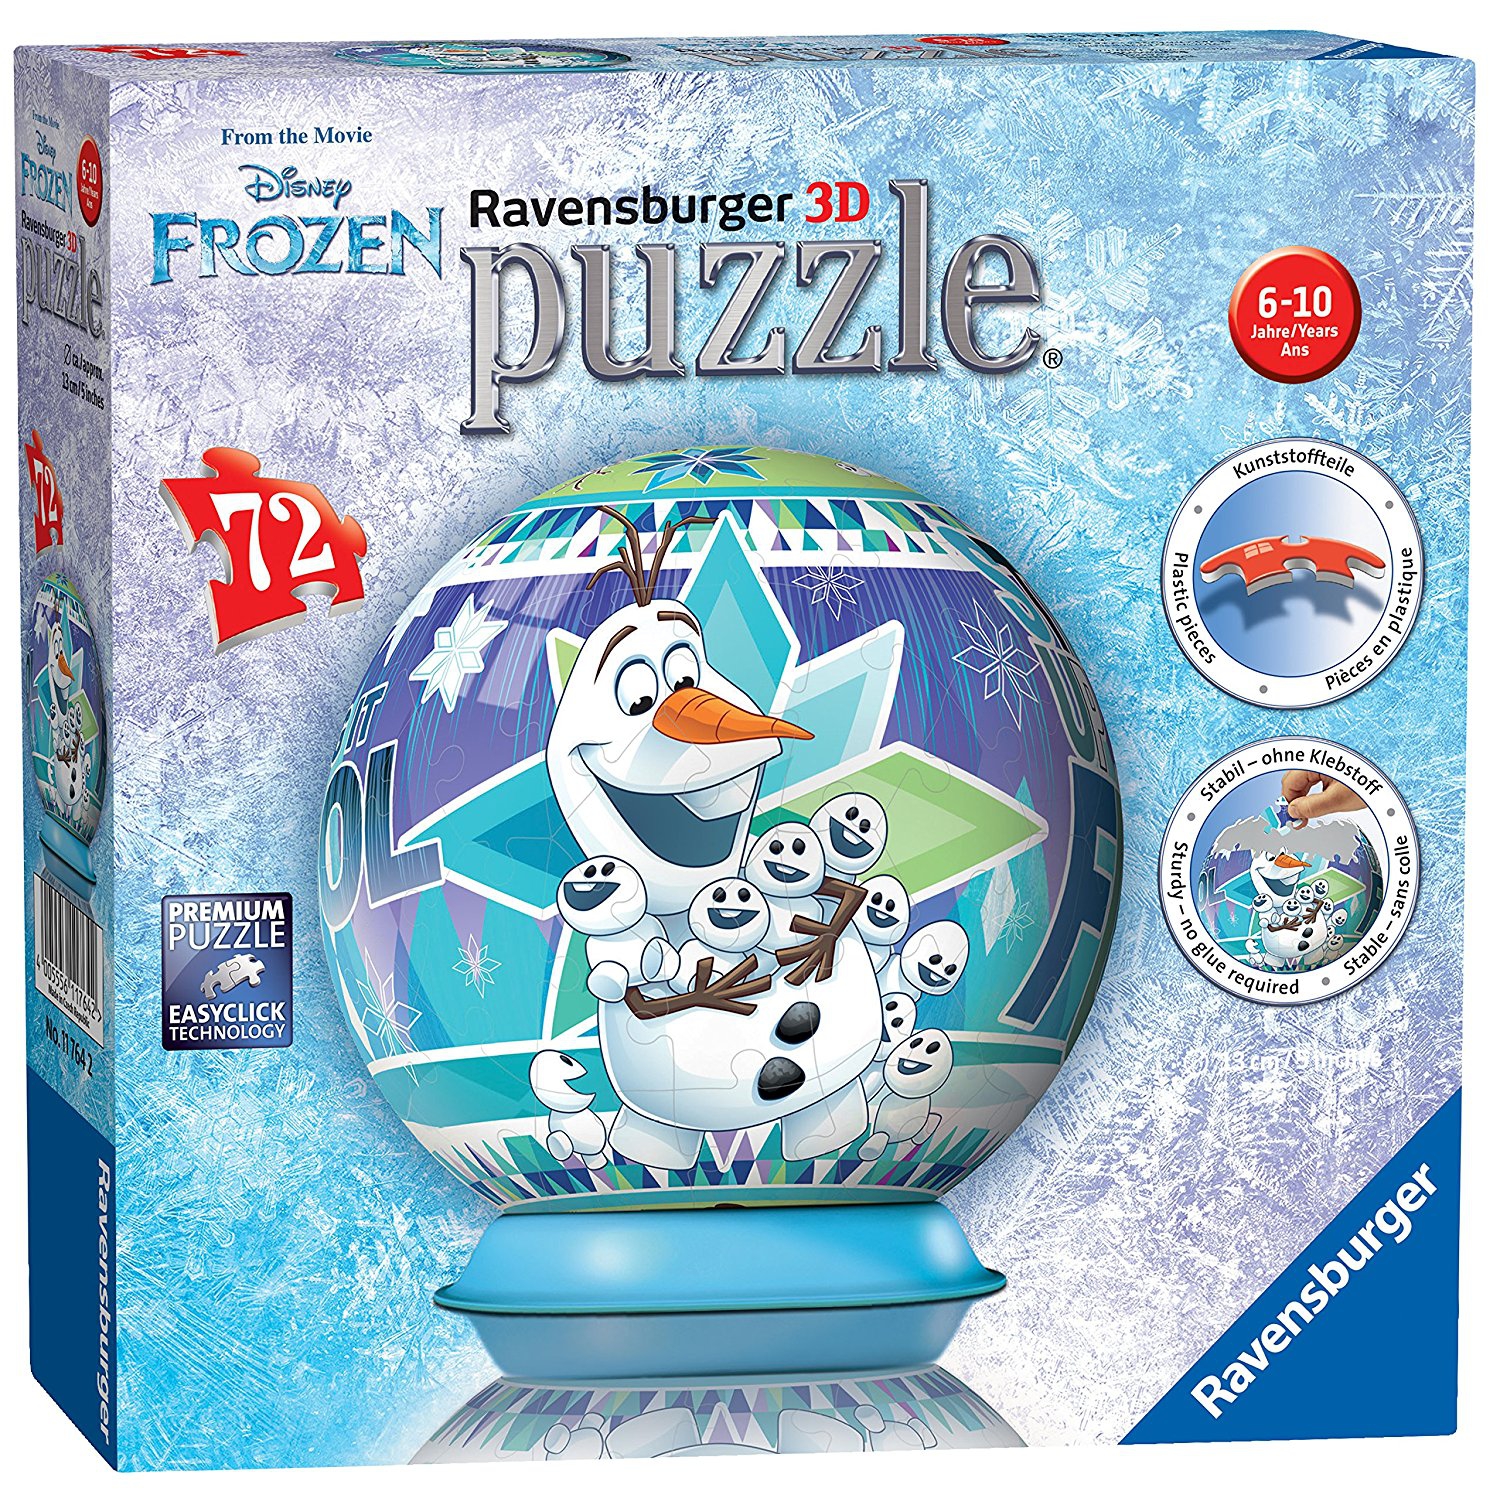 Disney Frozen 'Olaf' S Adventures' 3d 72 Piece Ball Jigsaw Puzzle Game